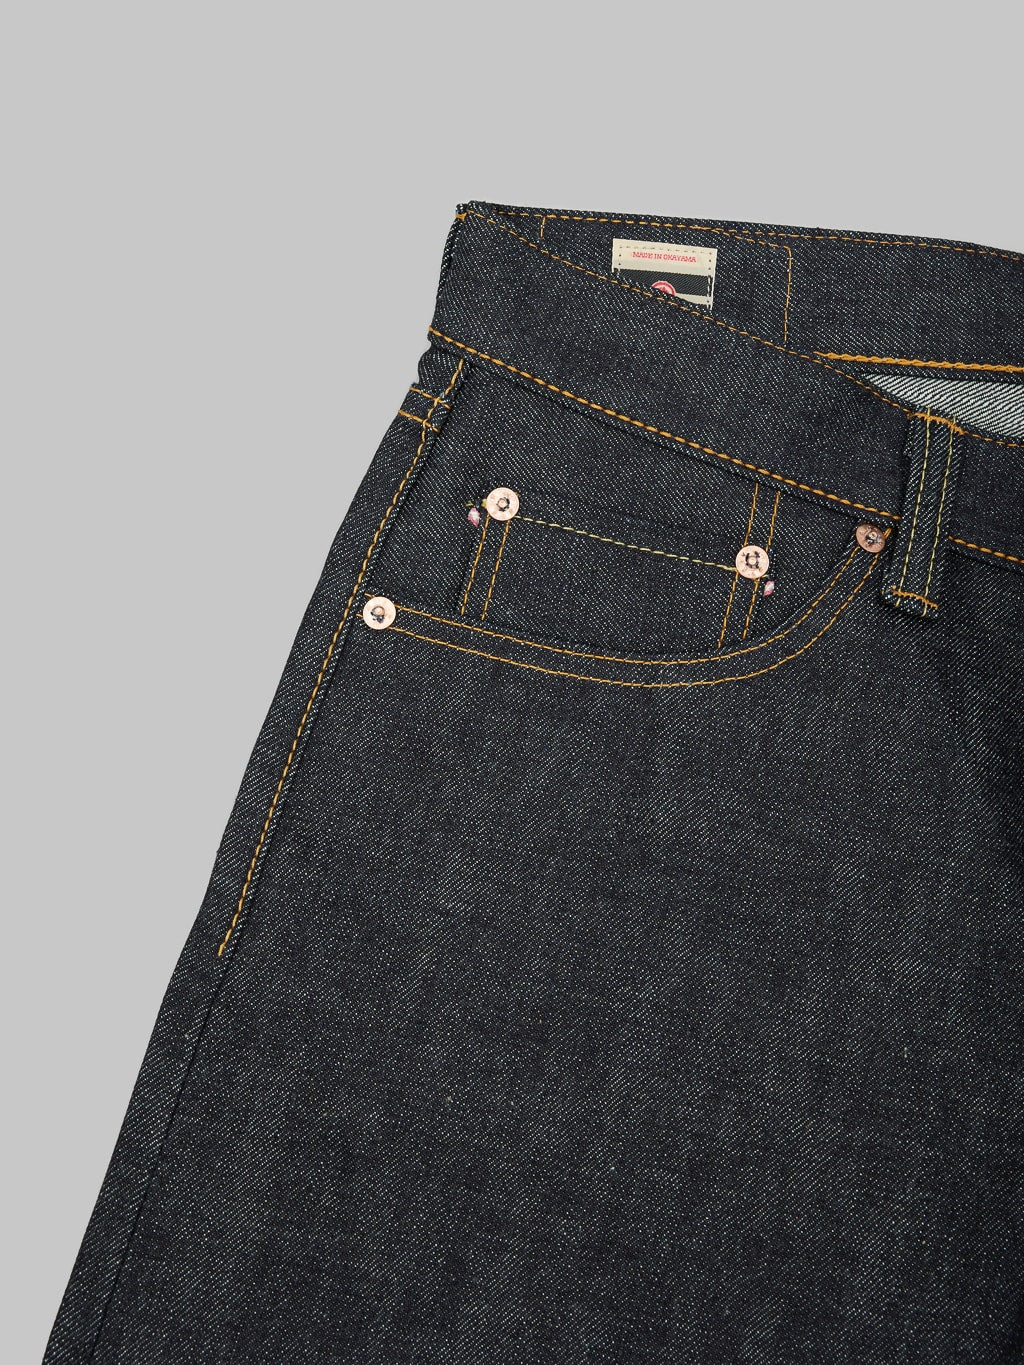 momotaro jeans 0405 v selvedge denim high tapered coin pocket